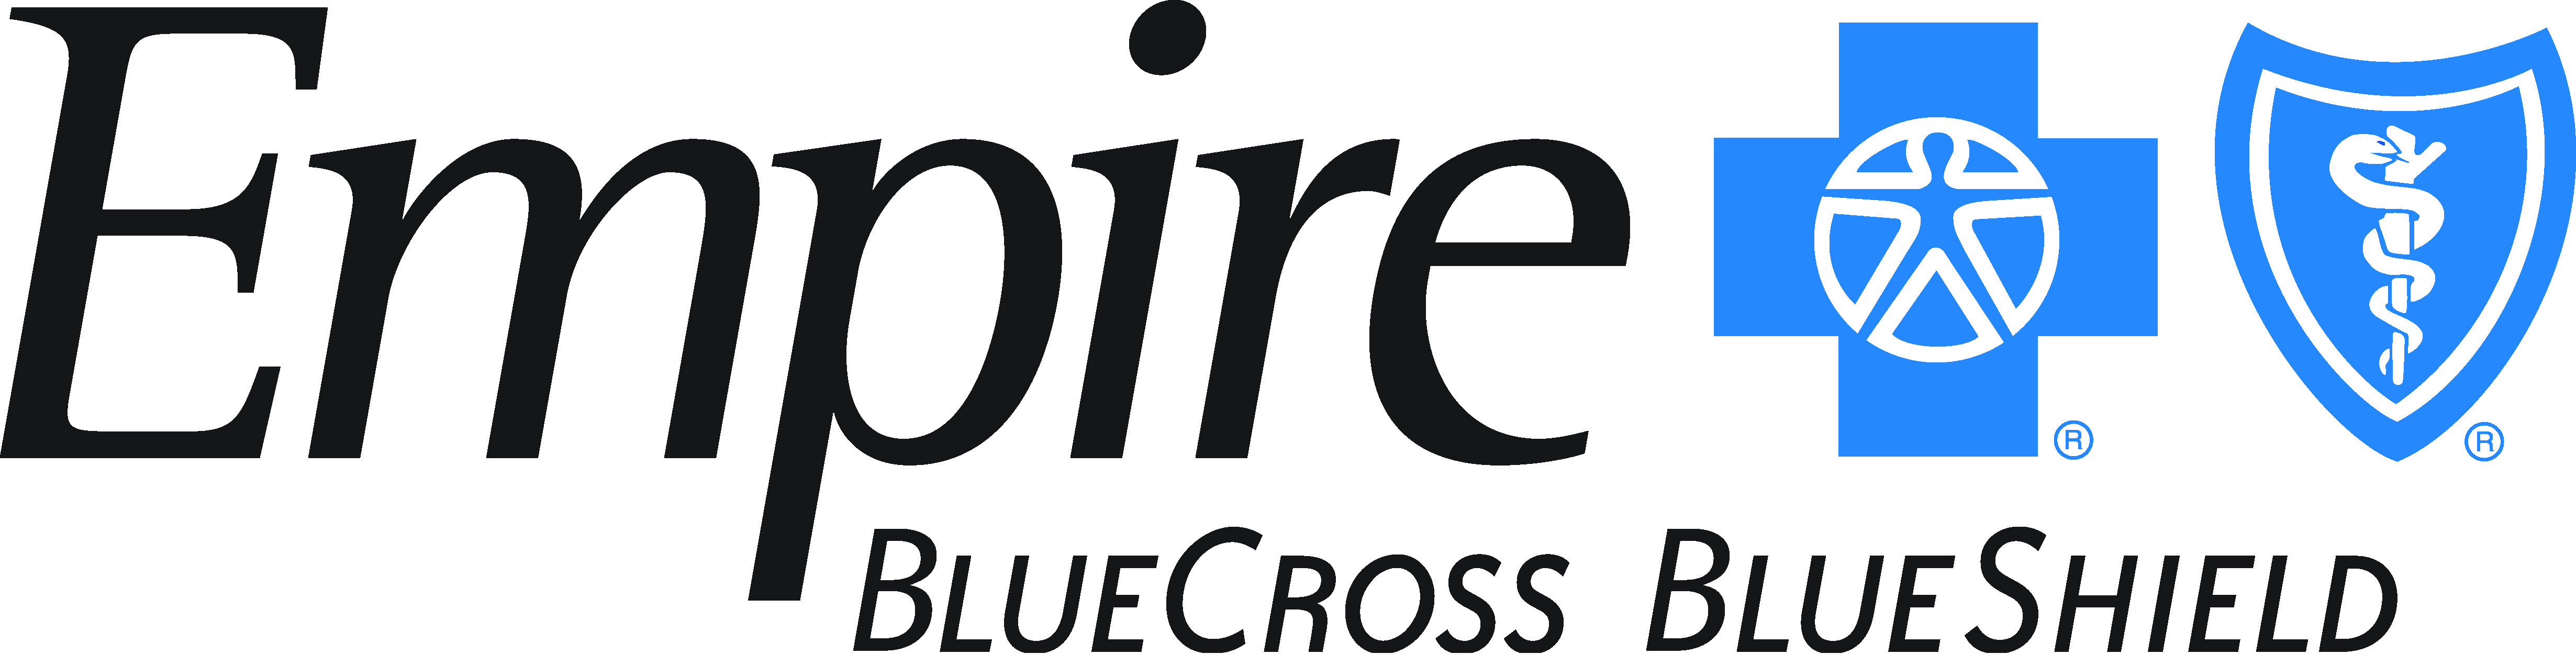 Empire BlueCross BlueShield HealthPlus!